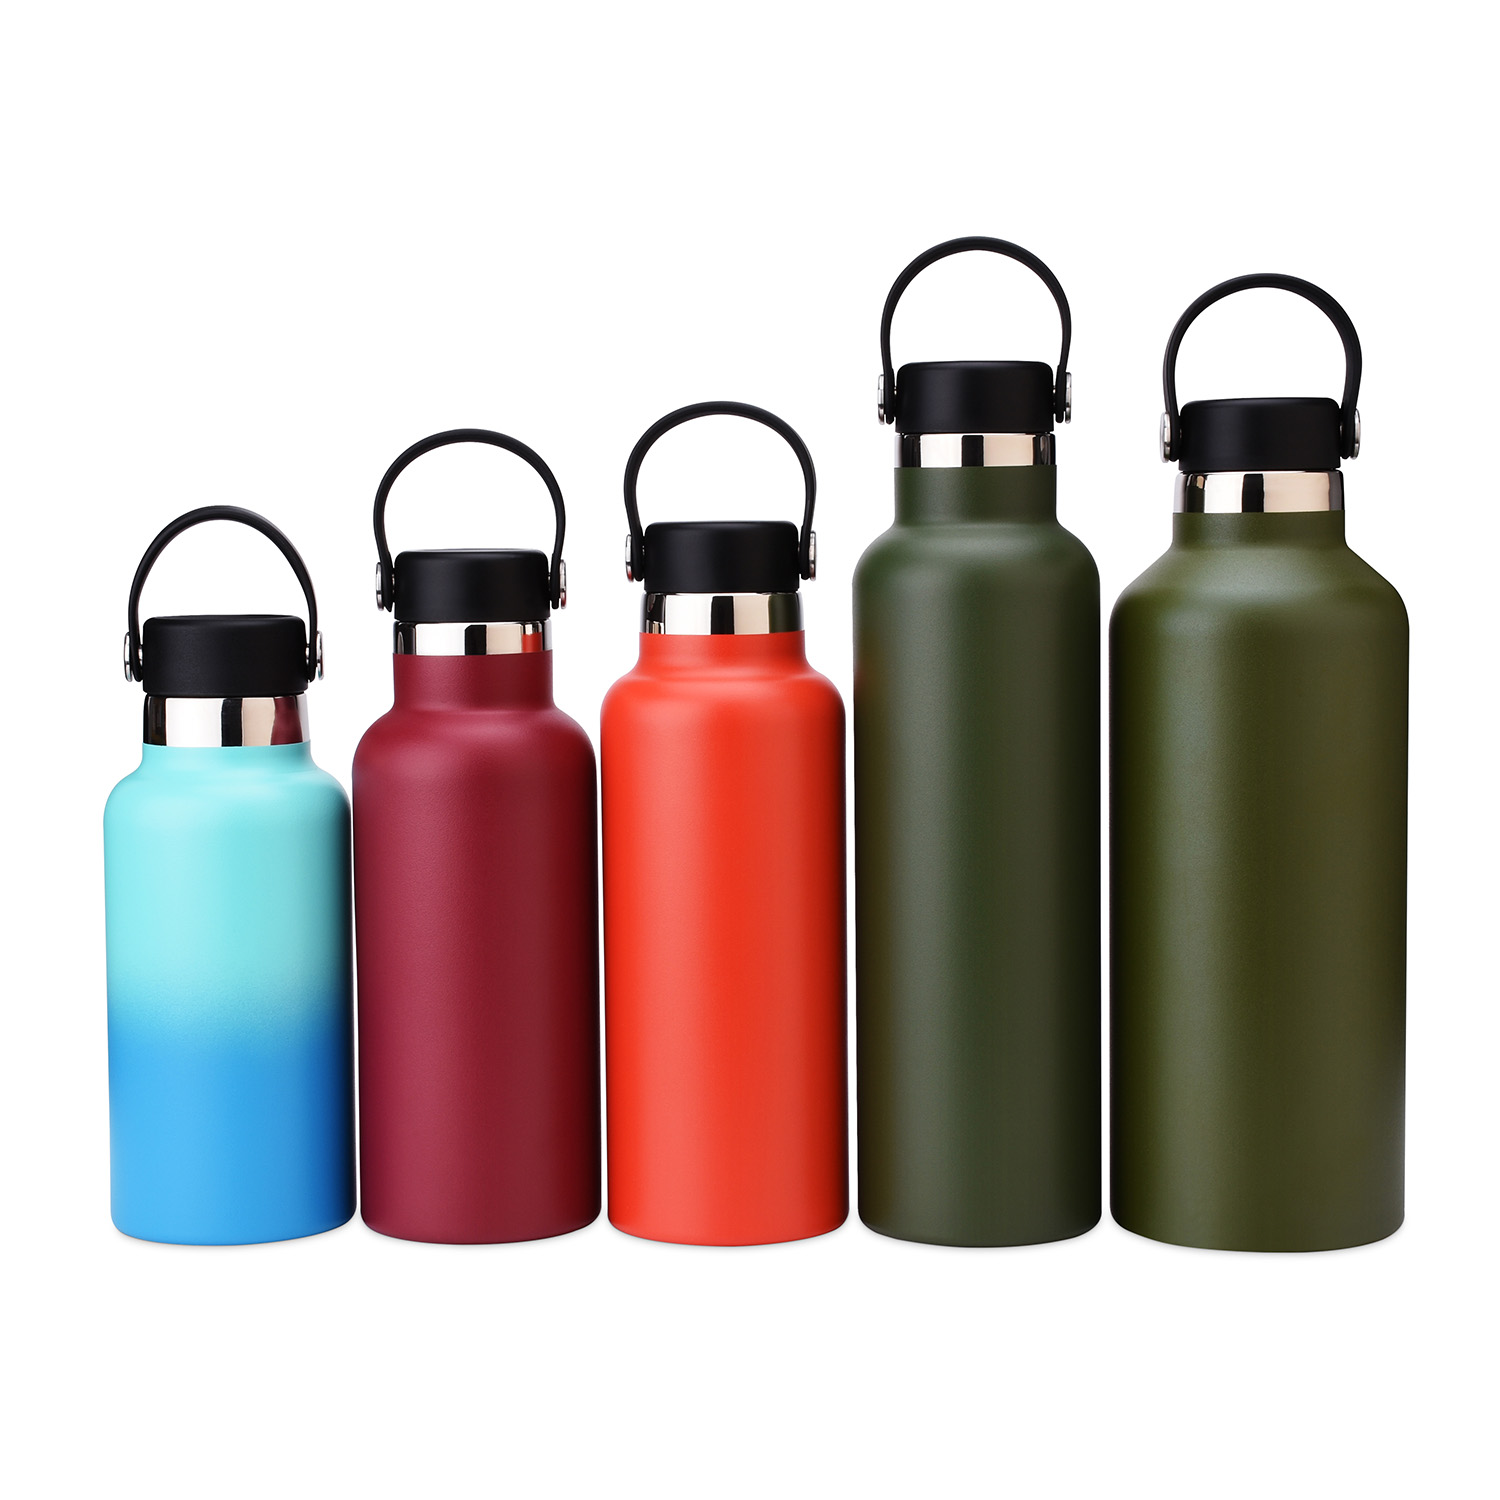 https://www.waterbottle.tech/wp-content/uploads/2019/09/thermal-insulation-stainless-steel-standard-mouth-water-bottle.jpg